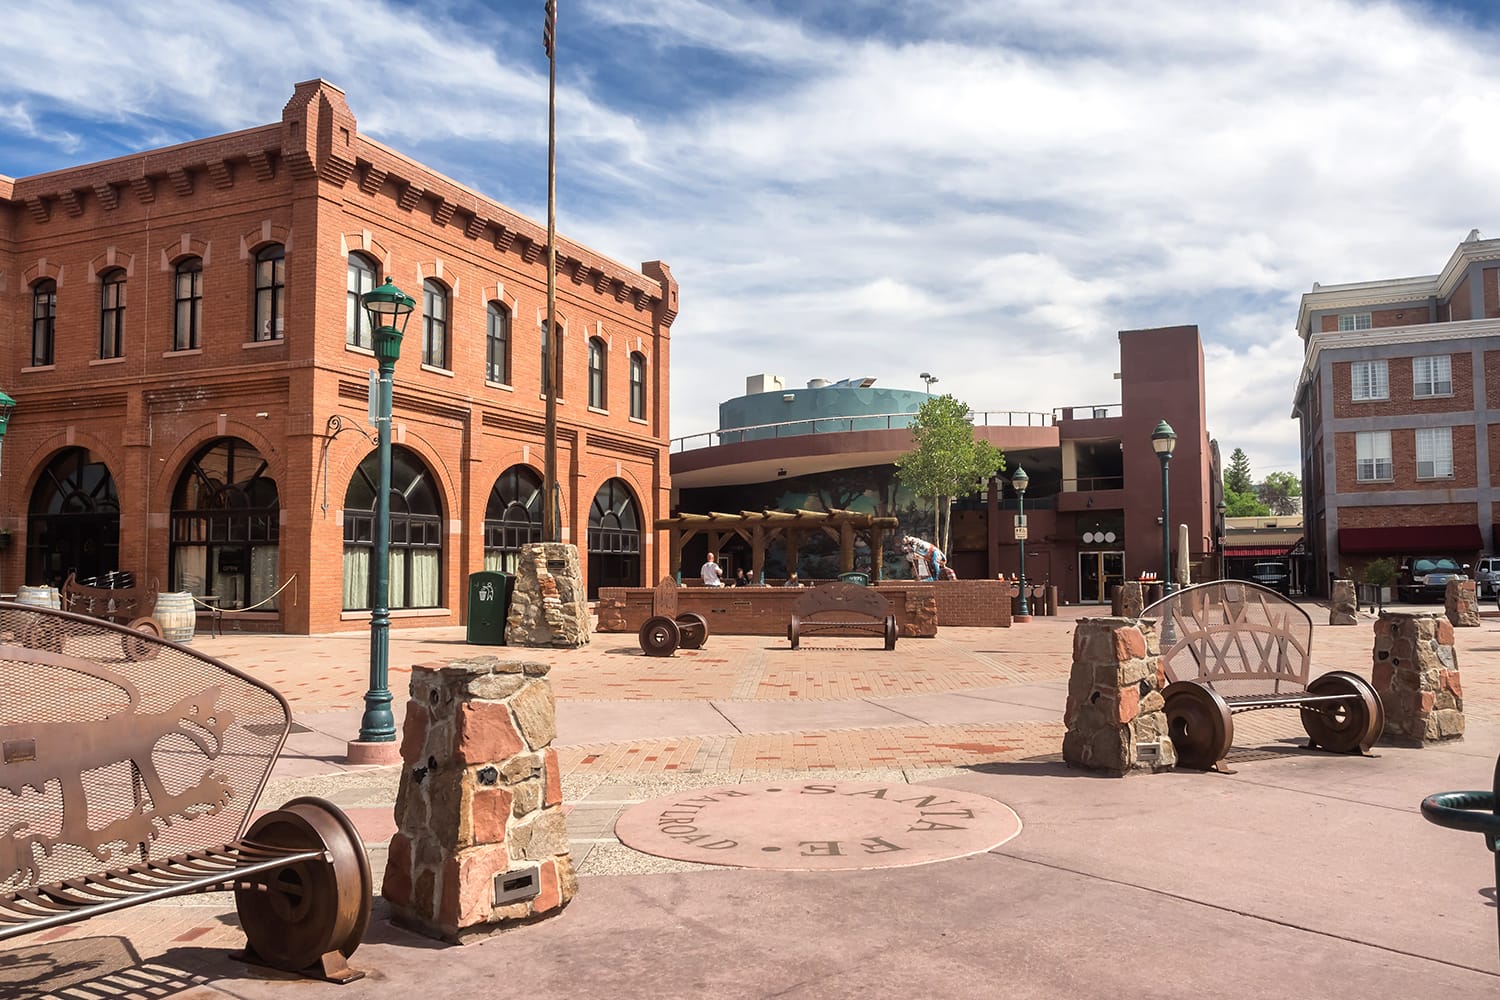 Main square in Flagstaff, Arizona, USA